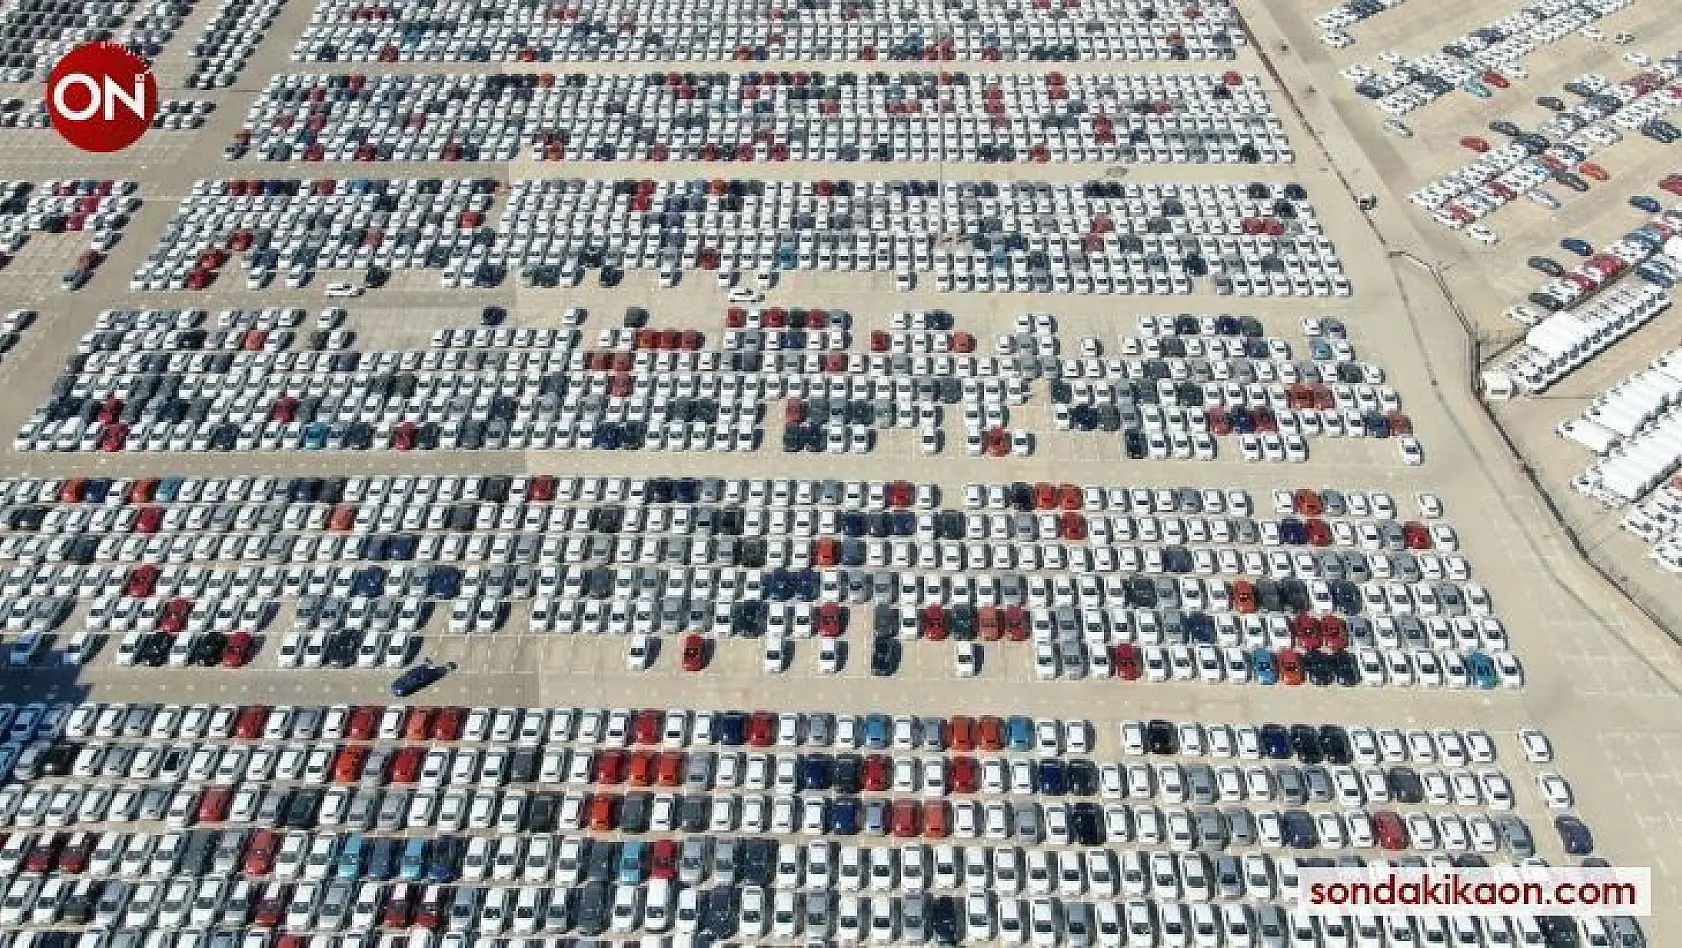 Otomotiv sektörü mayıs ayında 1,9 milyar dolar ihracata imza attı